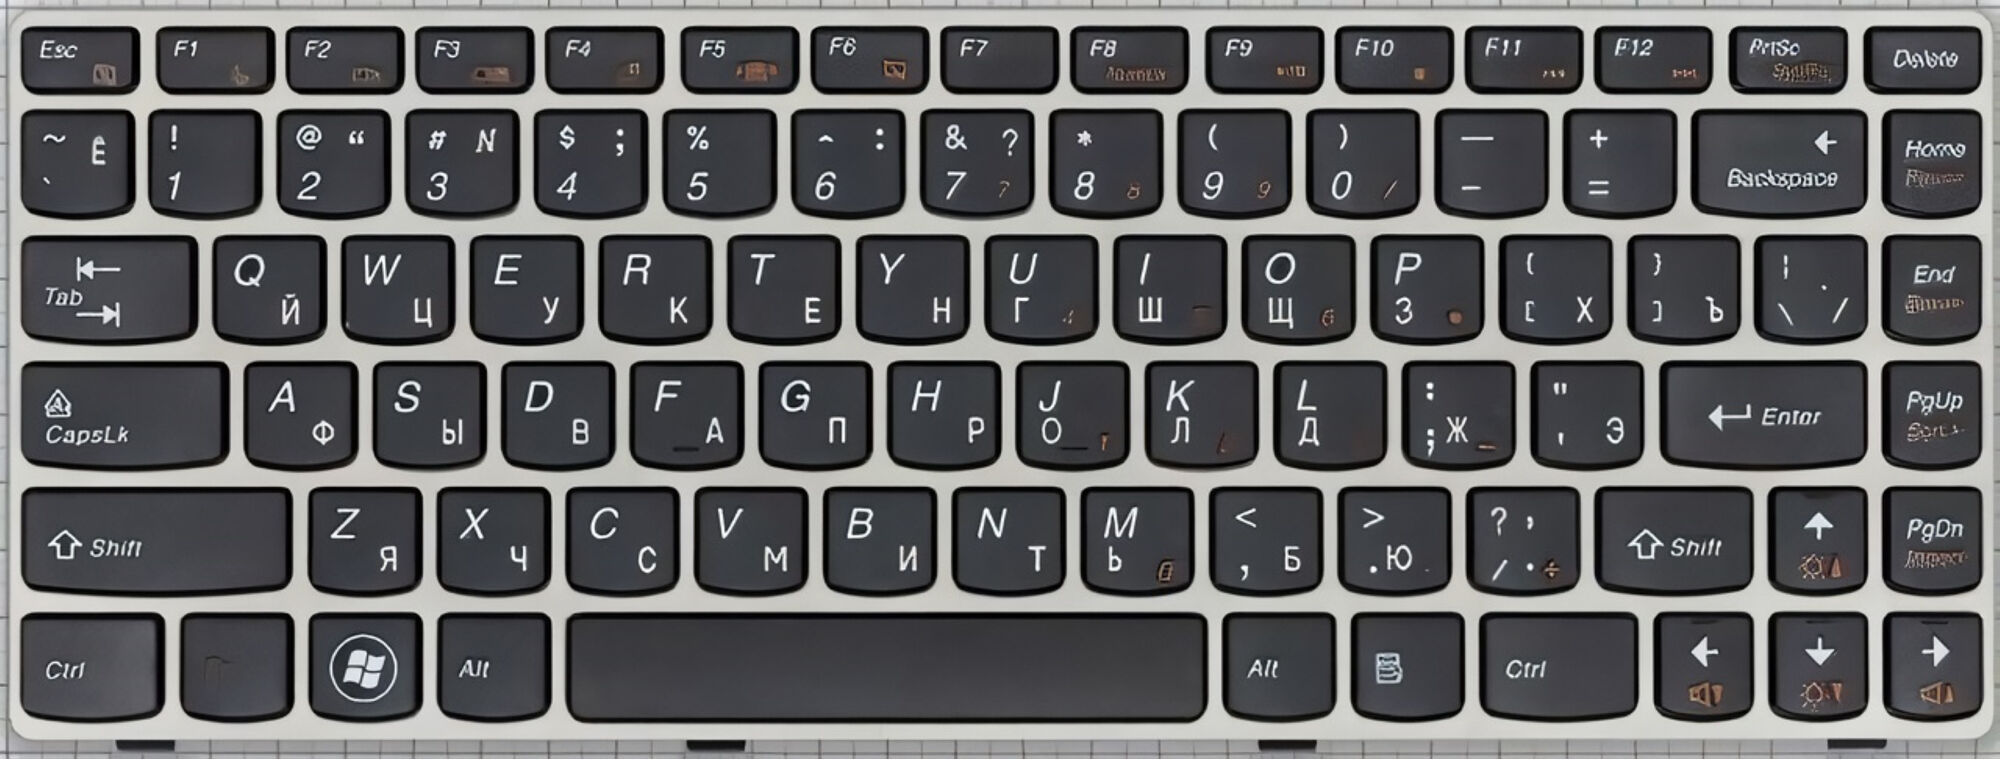 Клавиатура для ноутбука Lenovo Z360 p/n: 25-010743, 25010743, Z360-RU, V-116920BS1-RU, 25-010707